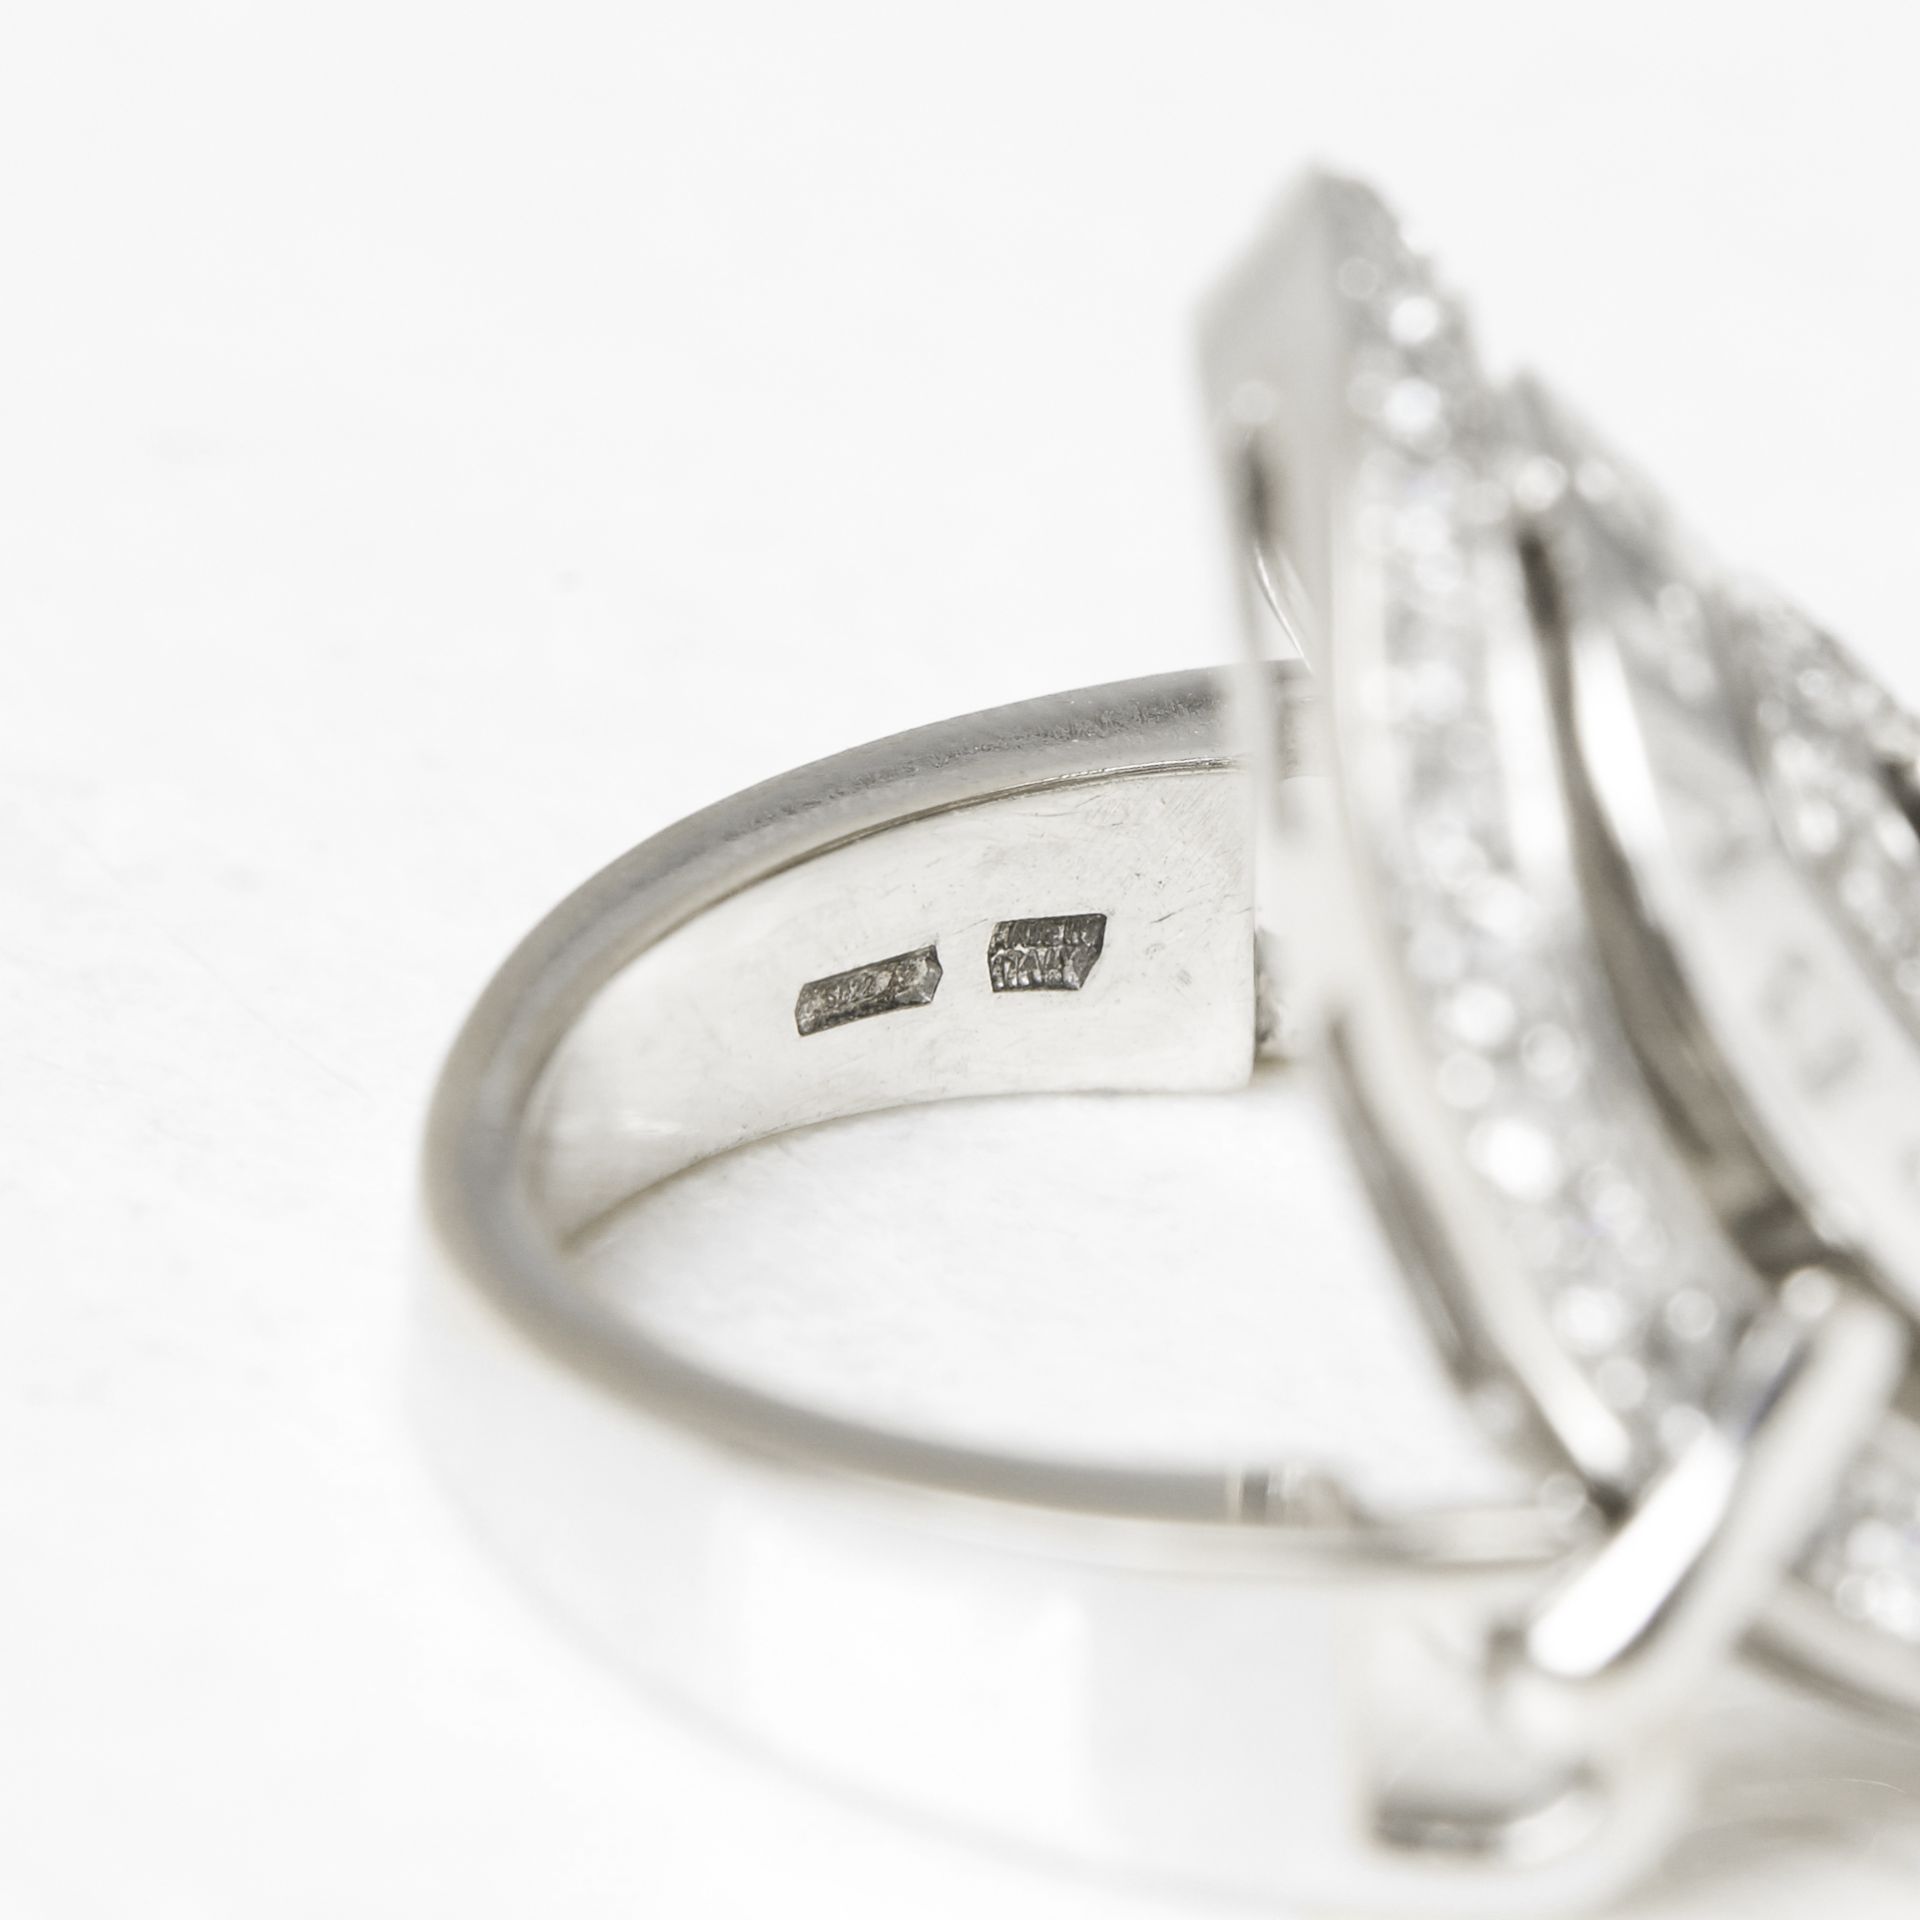 Bulgari 18k White Gold Diamond Cerchi Ring - Image 3 of 12